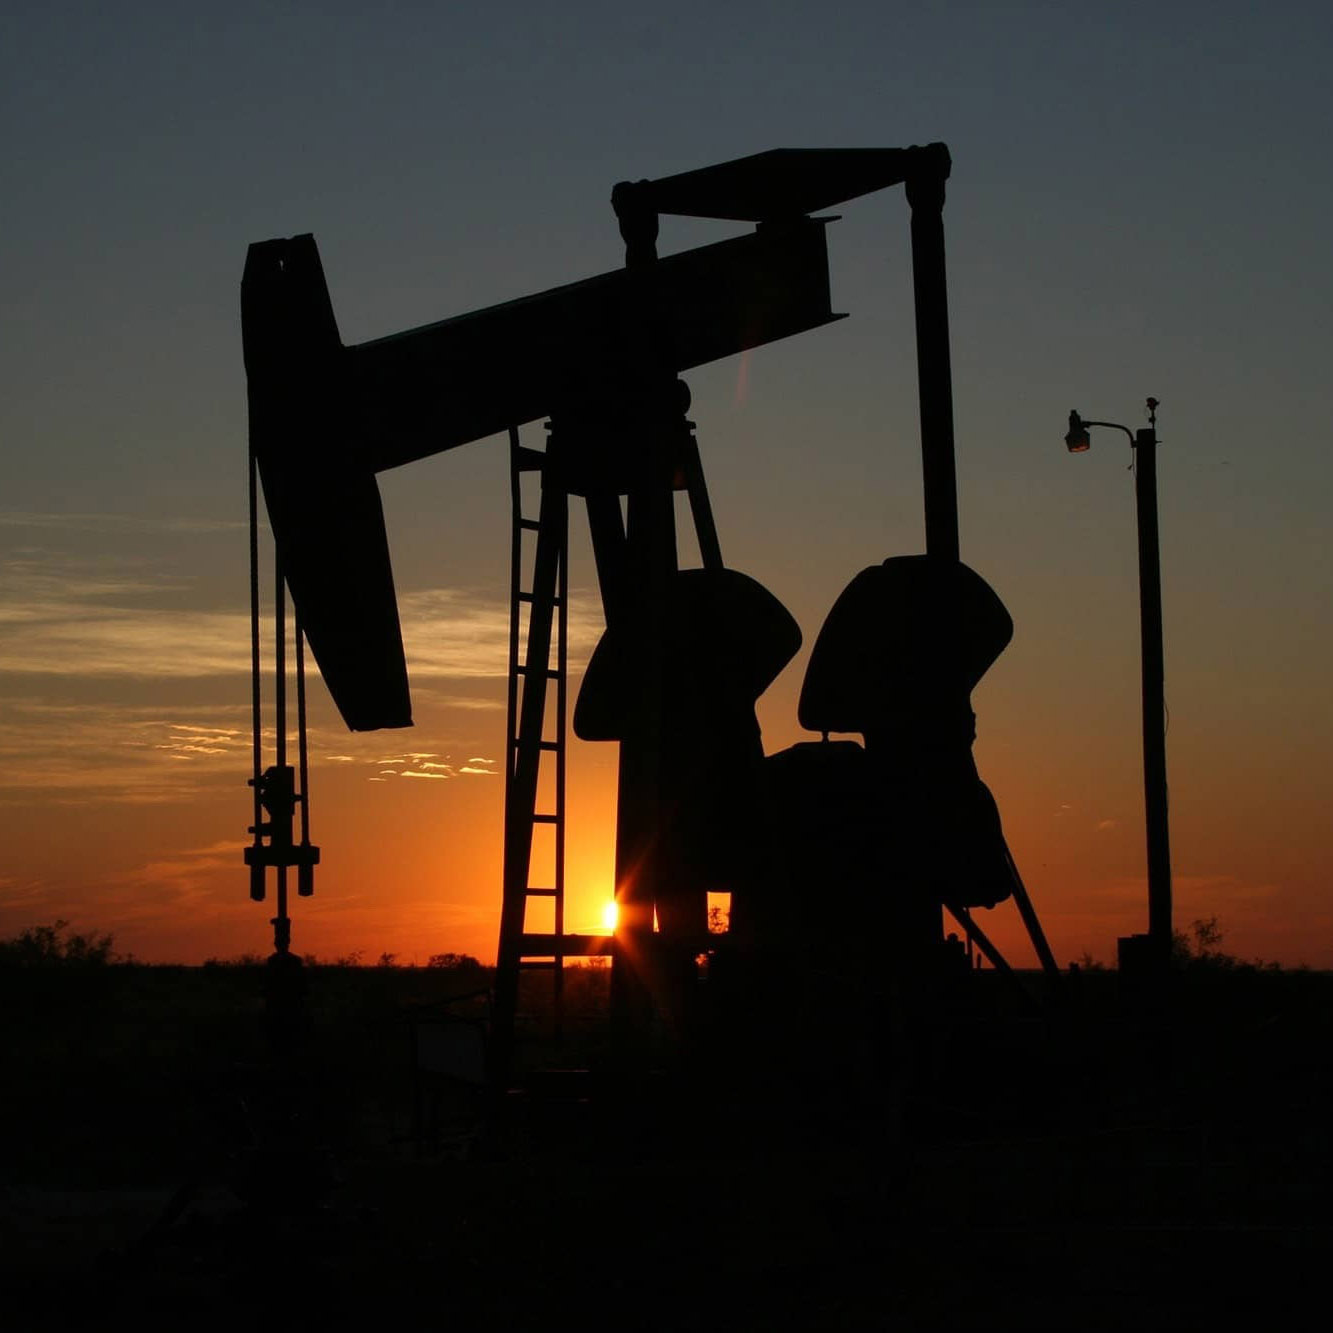 Petroleum Production Engineering Fundamentals